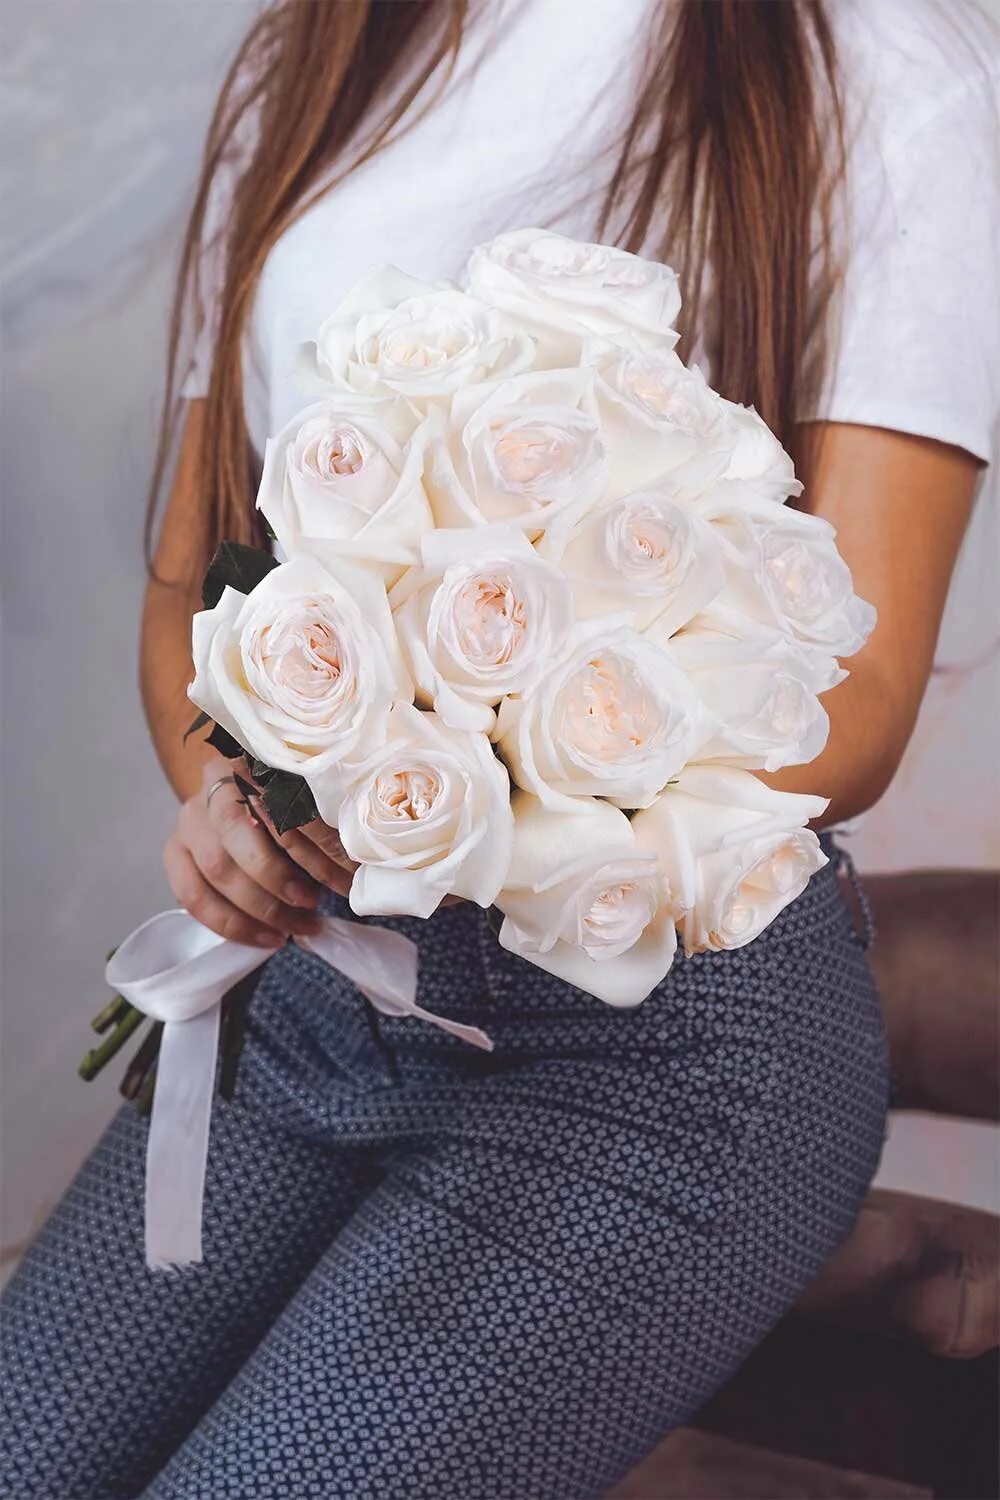 Девушка с белыми розами. Девушка с букетом роз. Букет "девушке". Девушка с букетом белых роз.